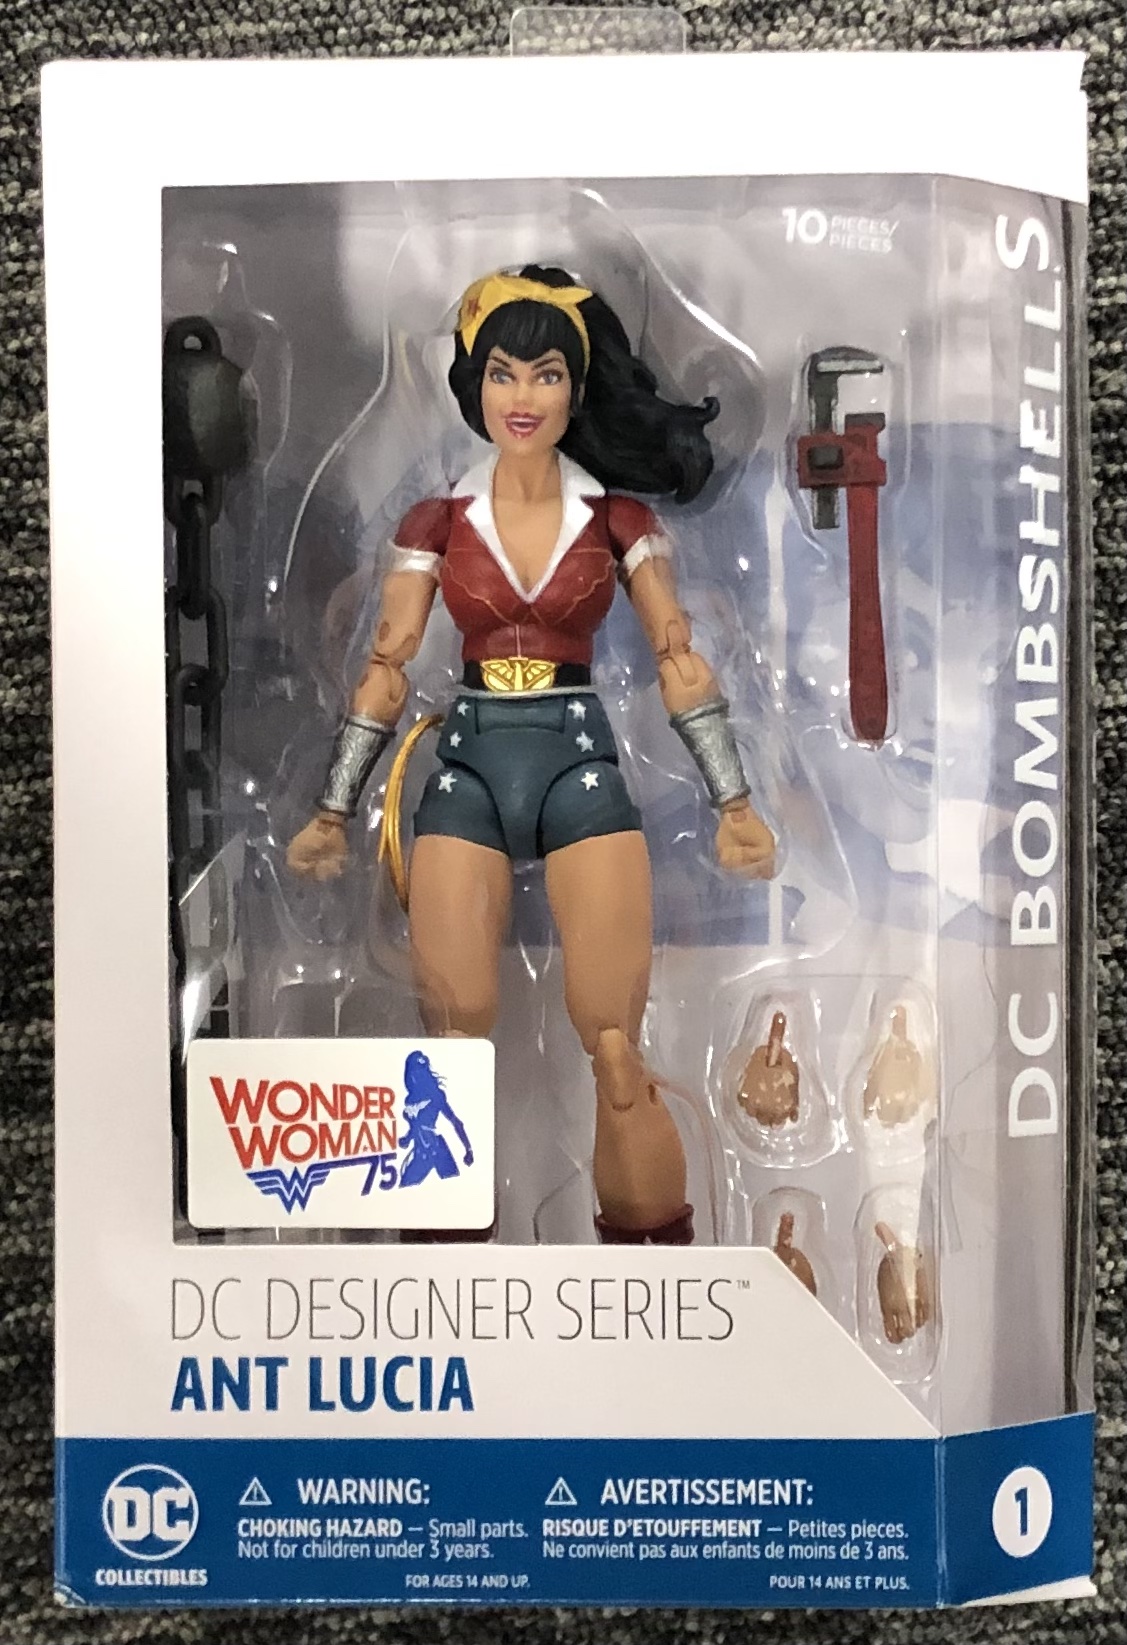 DC Comics Bombshells Wonder Woman Designer Series Action Figure By Ant Lucia 